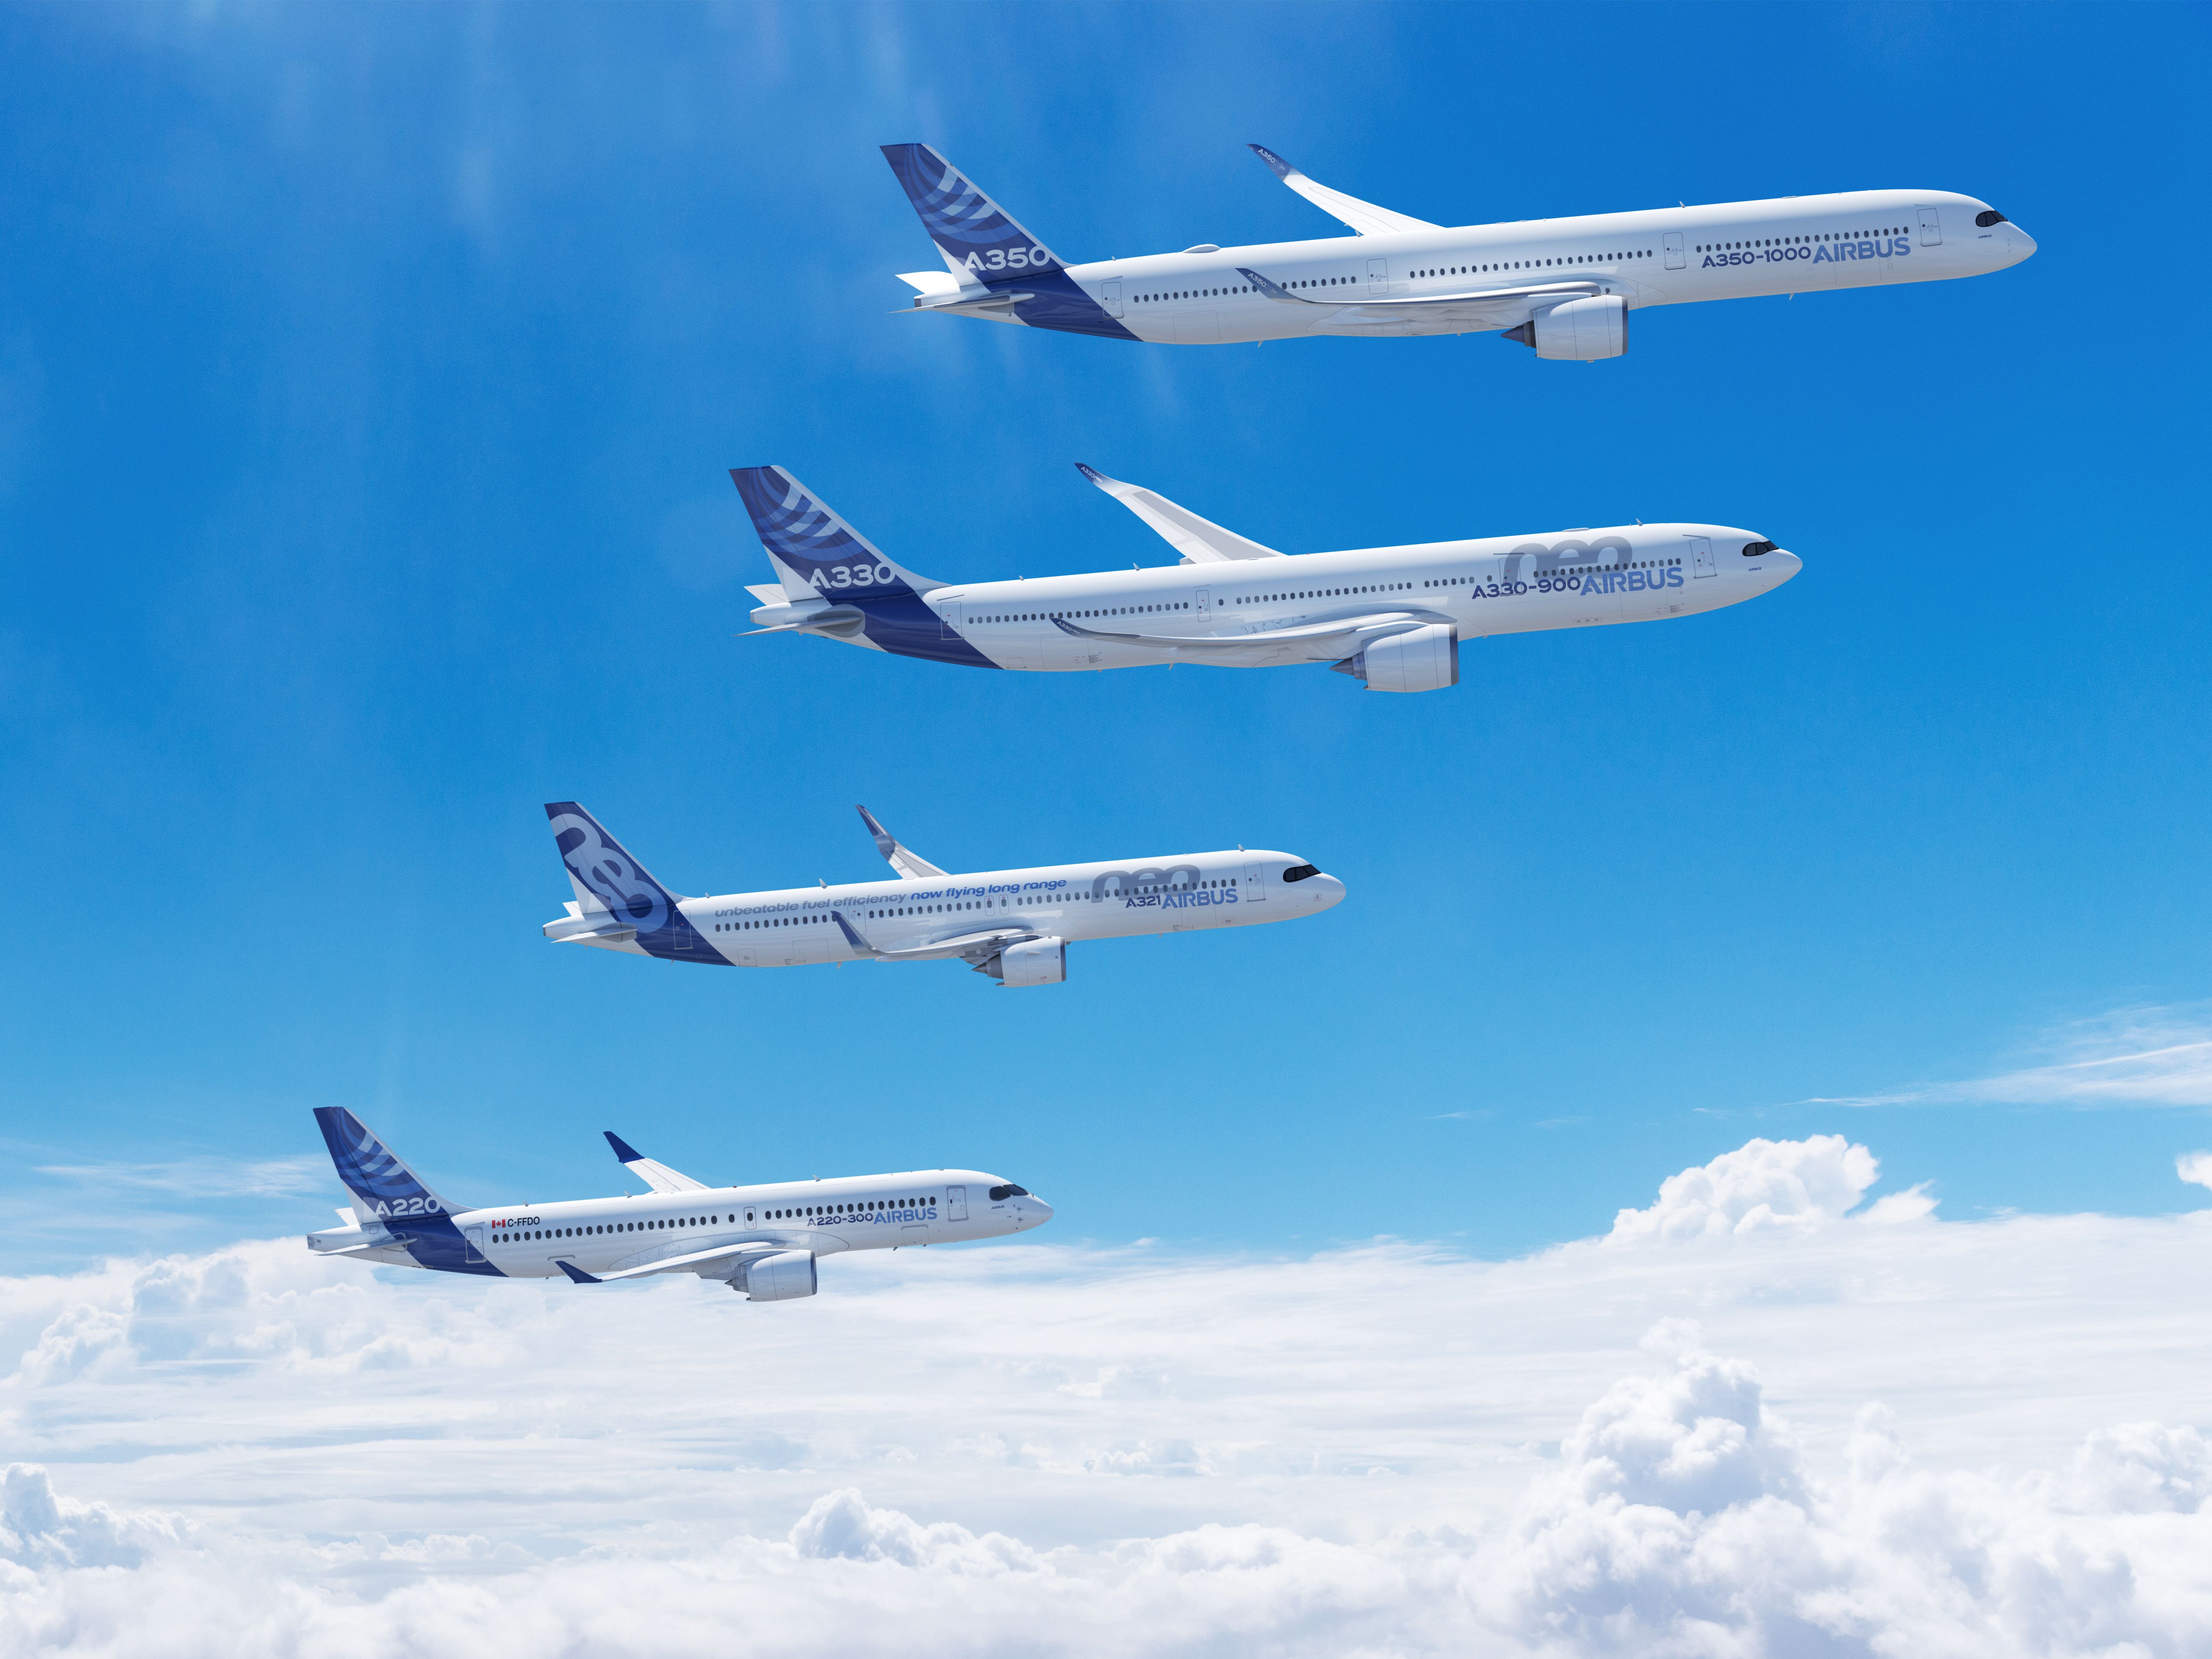 Airbus Family in flight